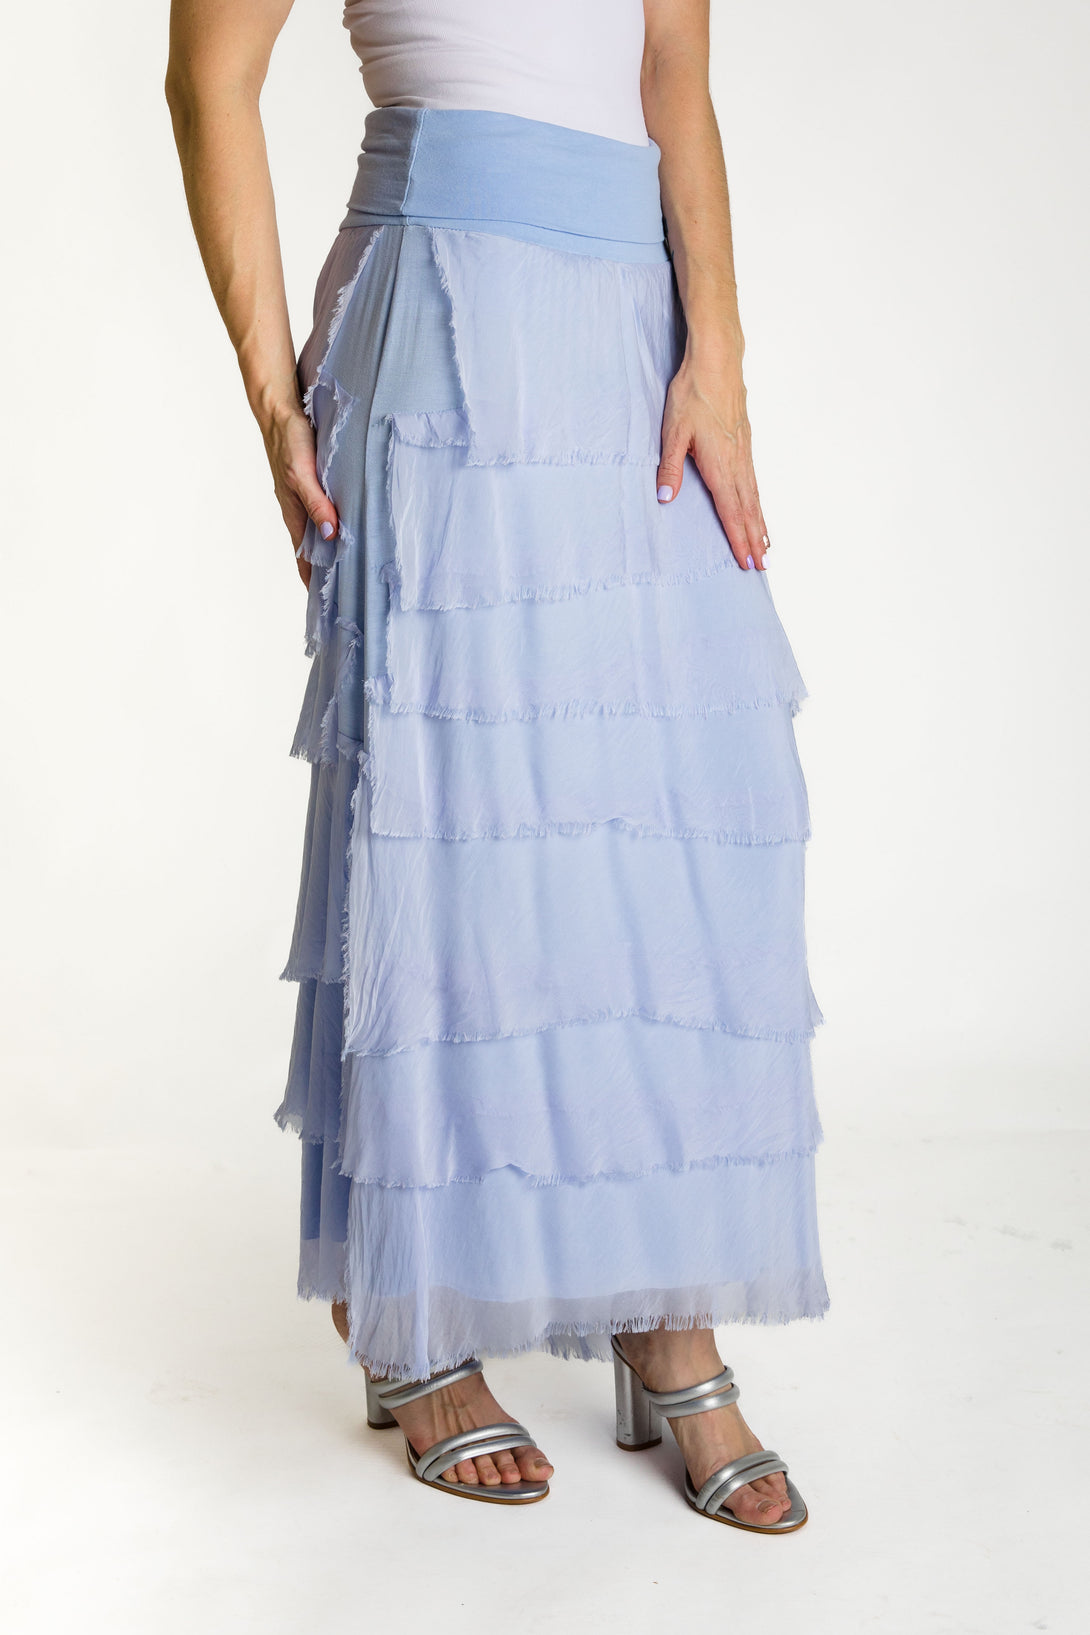 Fifi Skirt in Periwinkle - Imagine Fashion